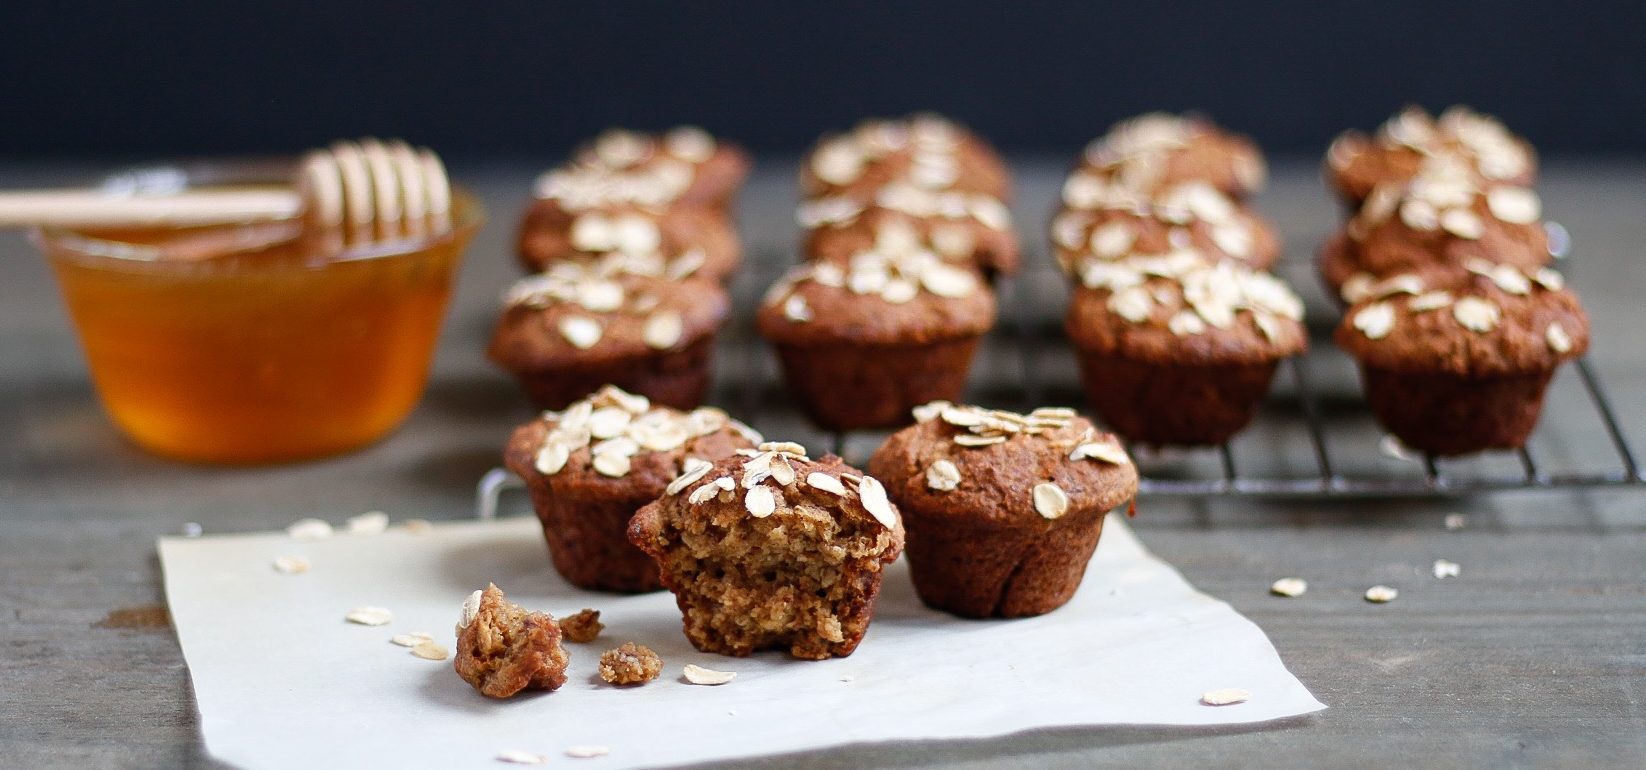 applesauce oat bran muffins, oat bran muffins, applesauce muffins, mini muffins, applesauce mini muffins